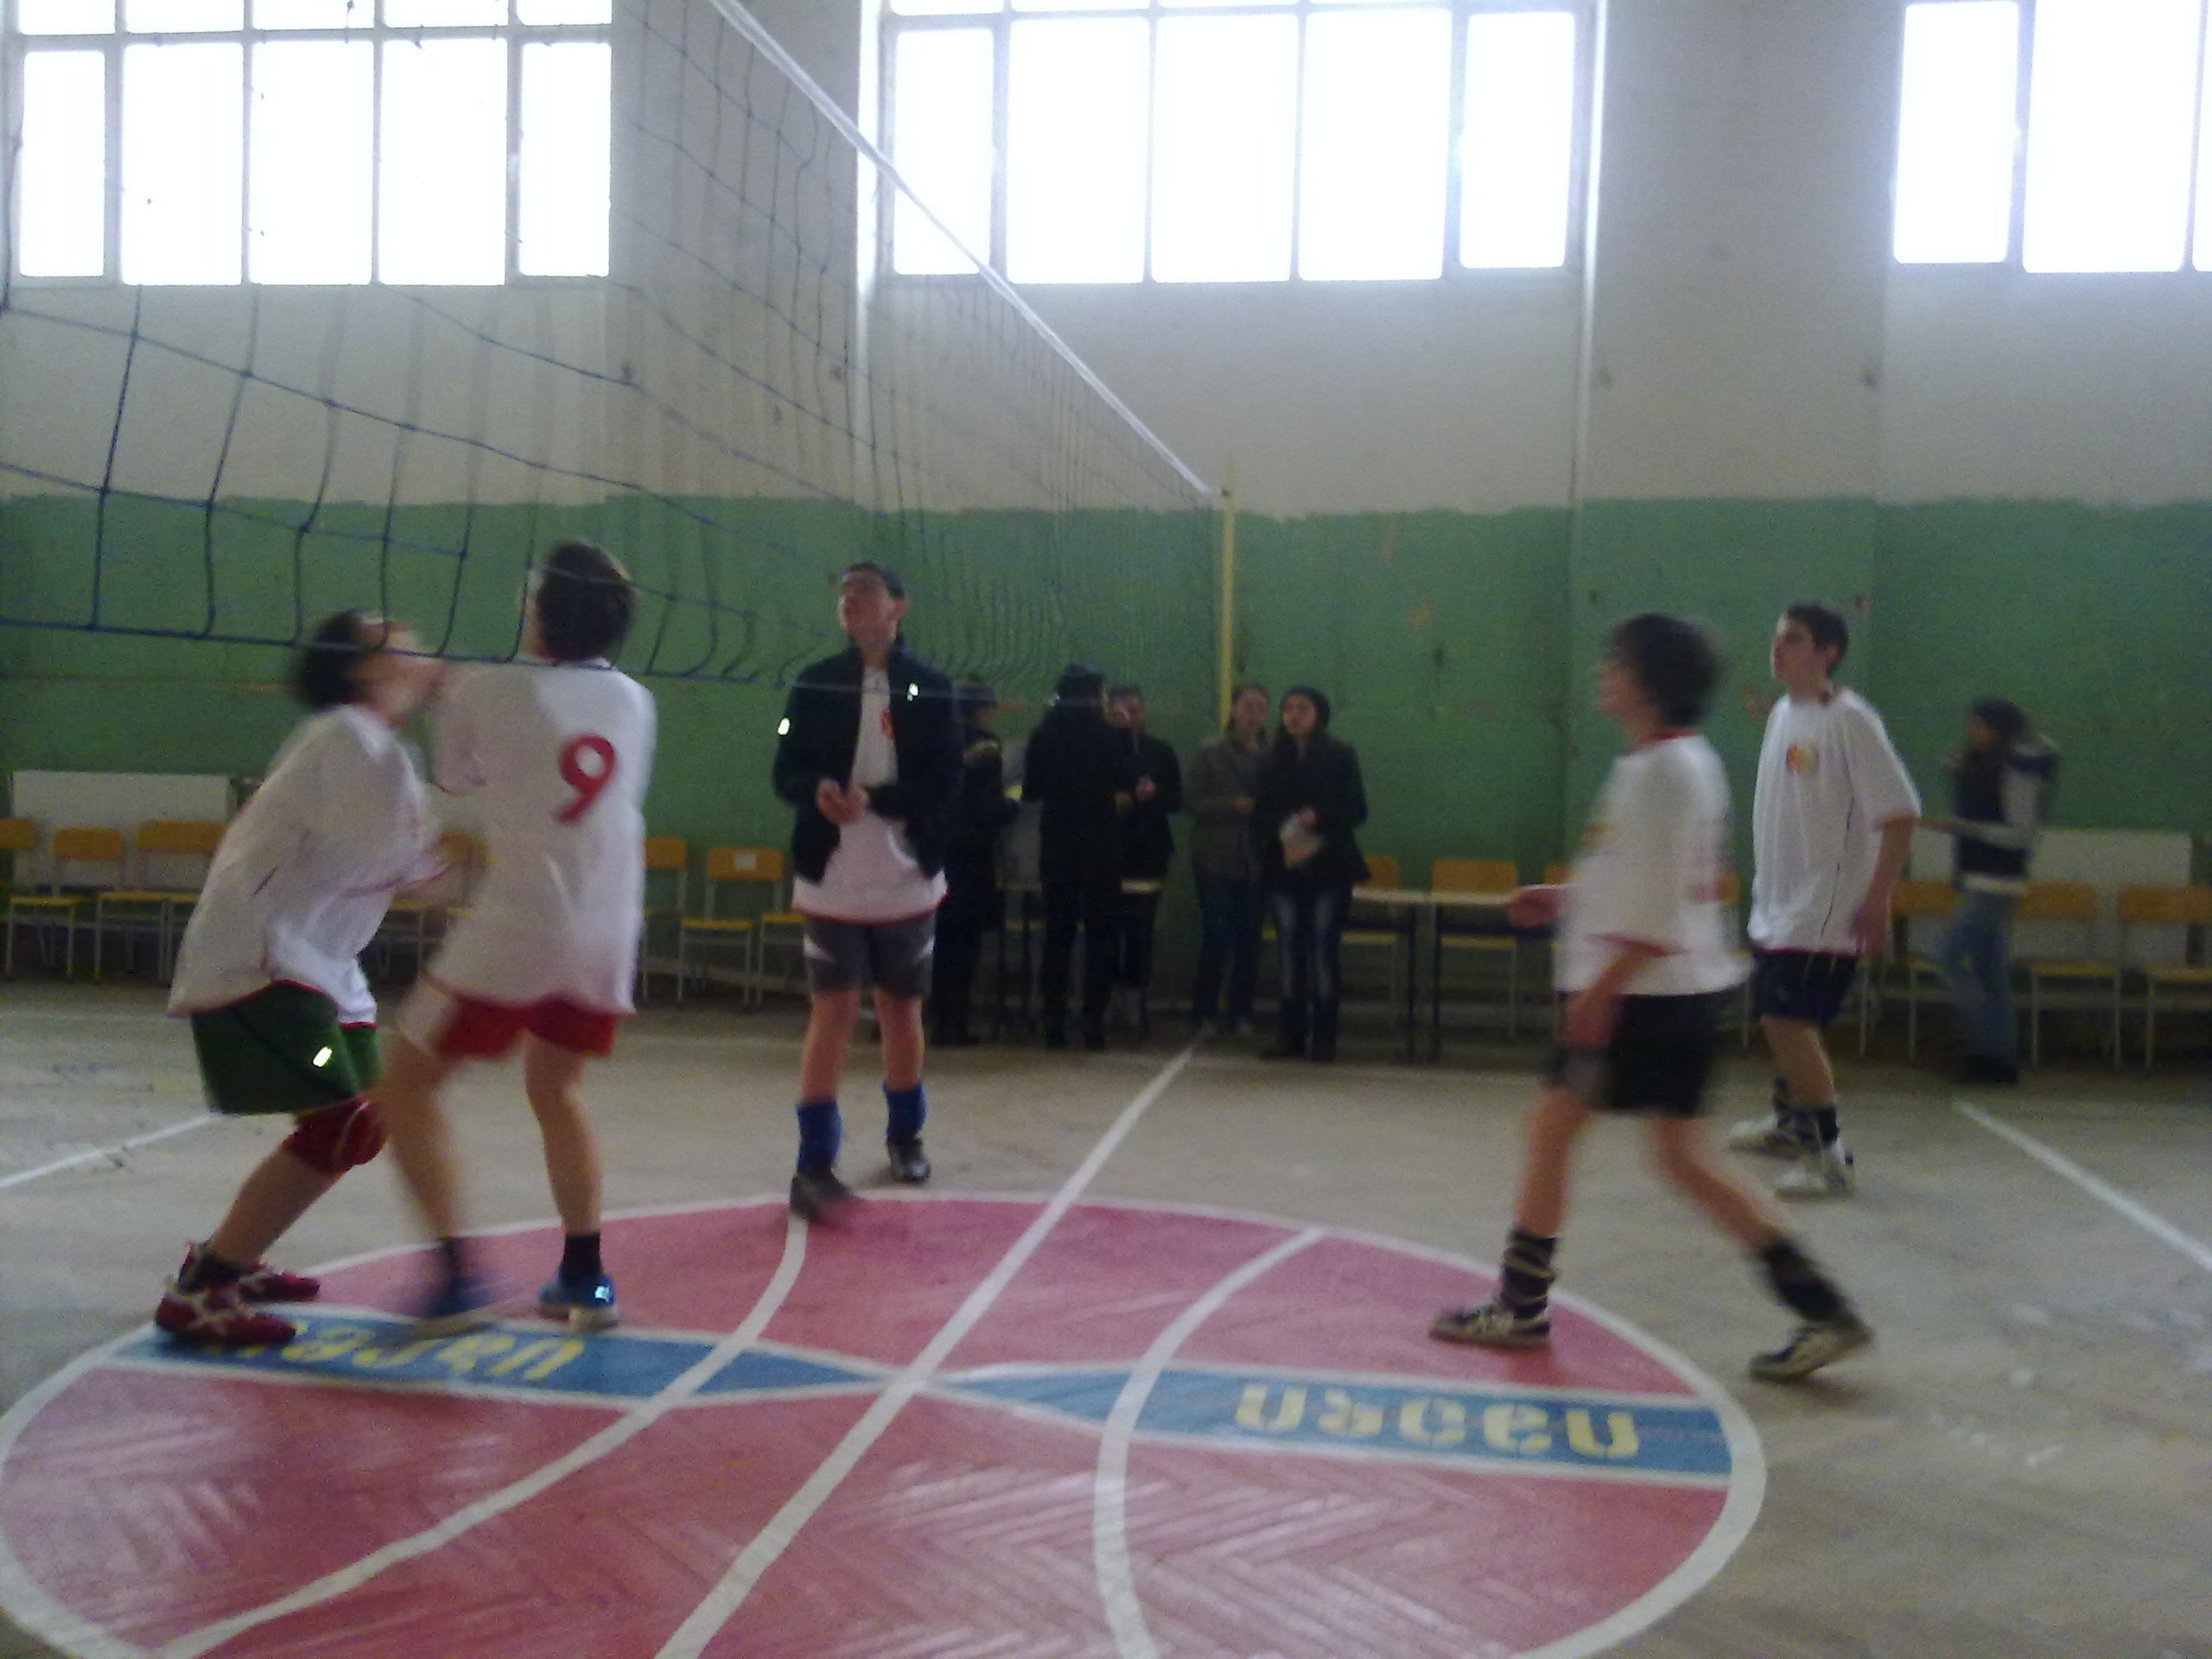 Volleyball - Volleyball Photo (16010889) - Fanpop